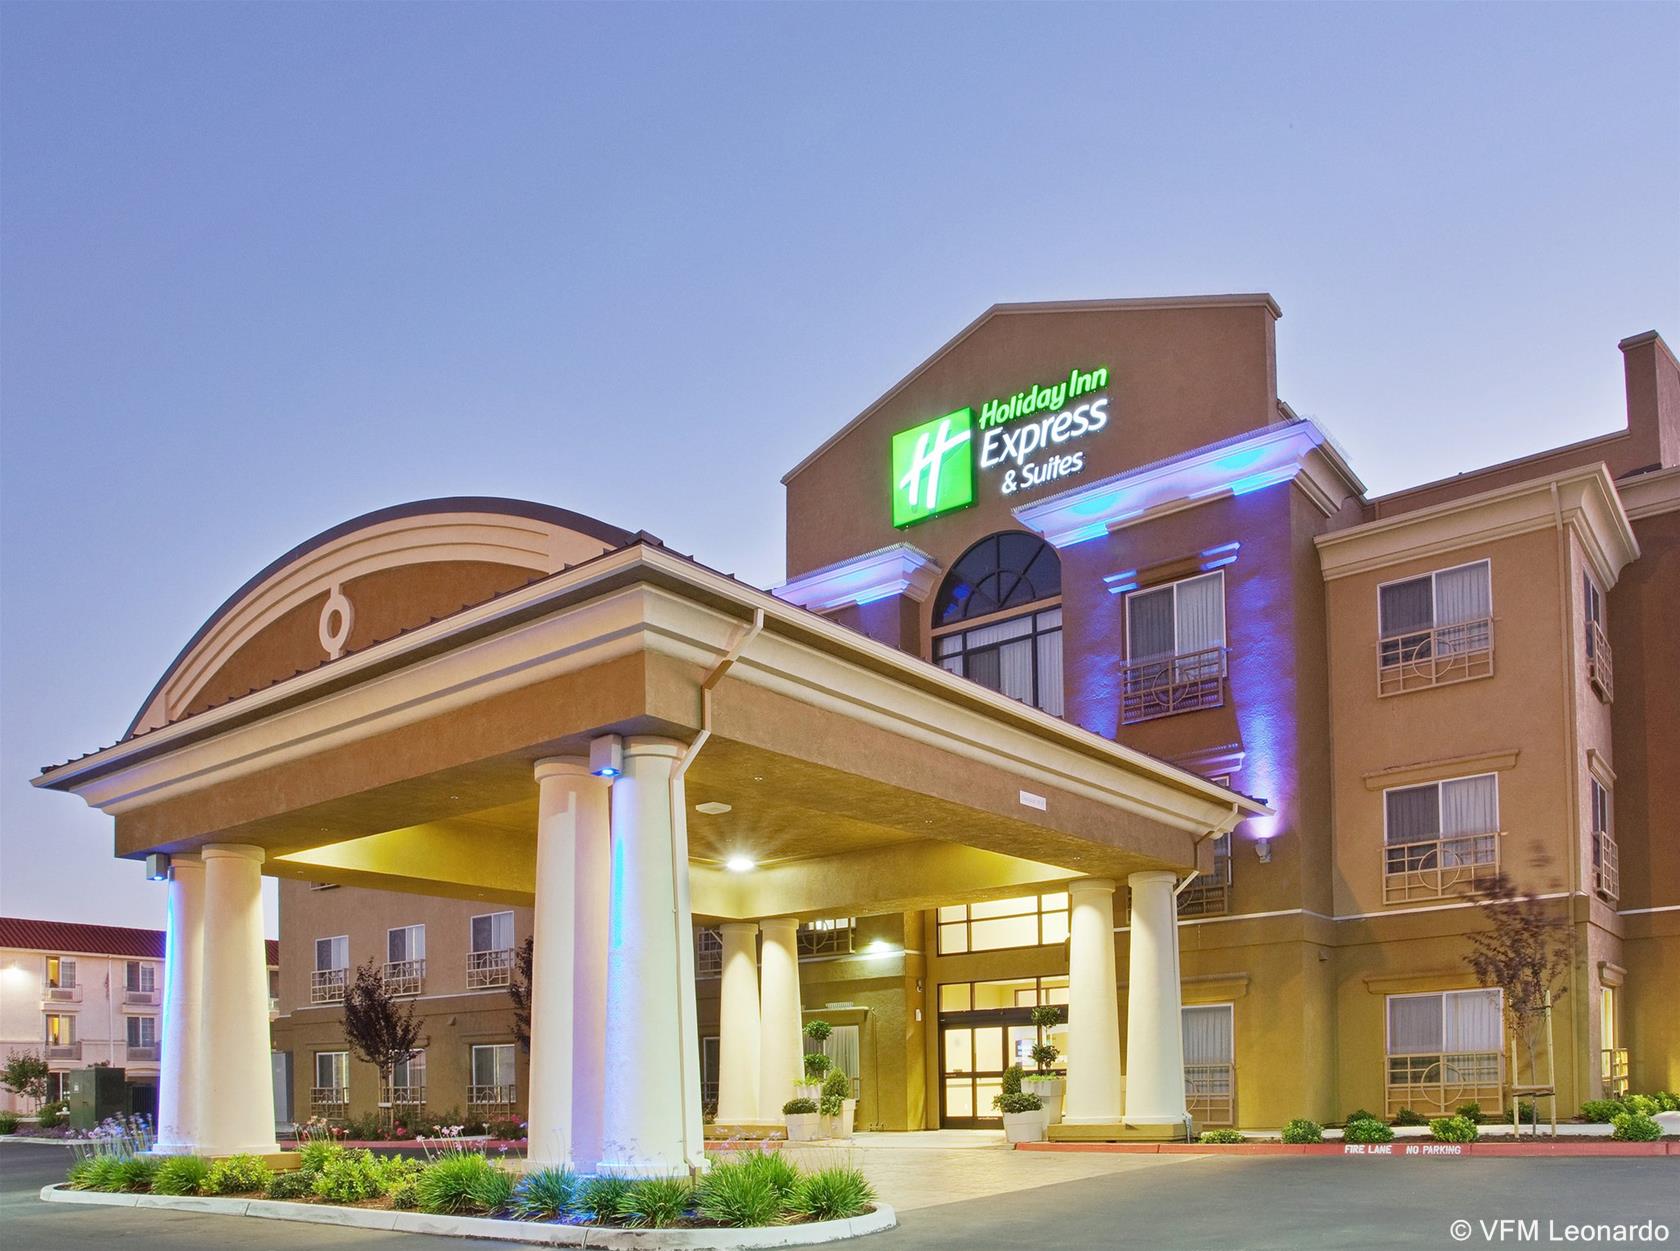 Holiday Inn Express Hotel & Suites Salinas